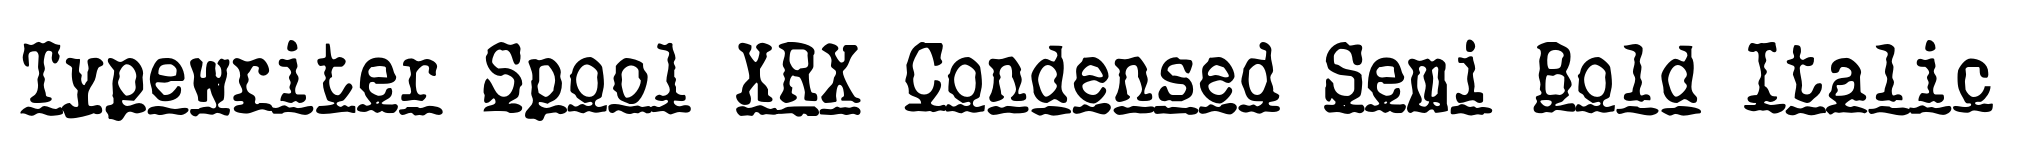 Typewriter Spool XRX Condensed Semi Bold Italic image